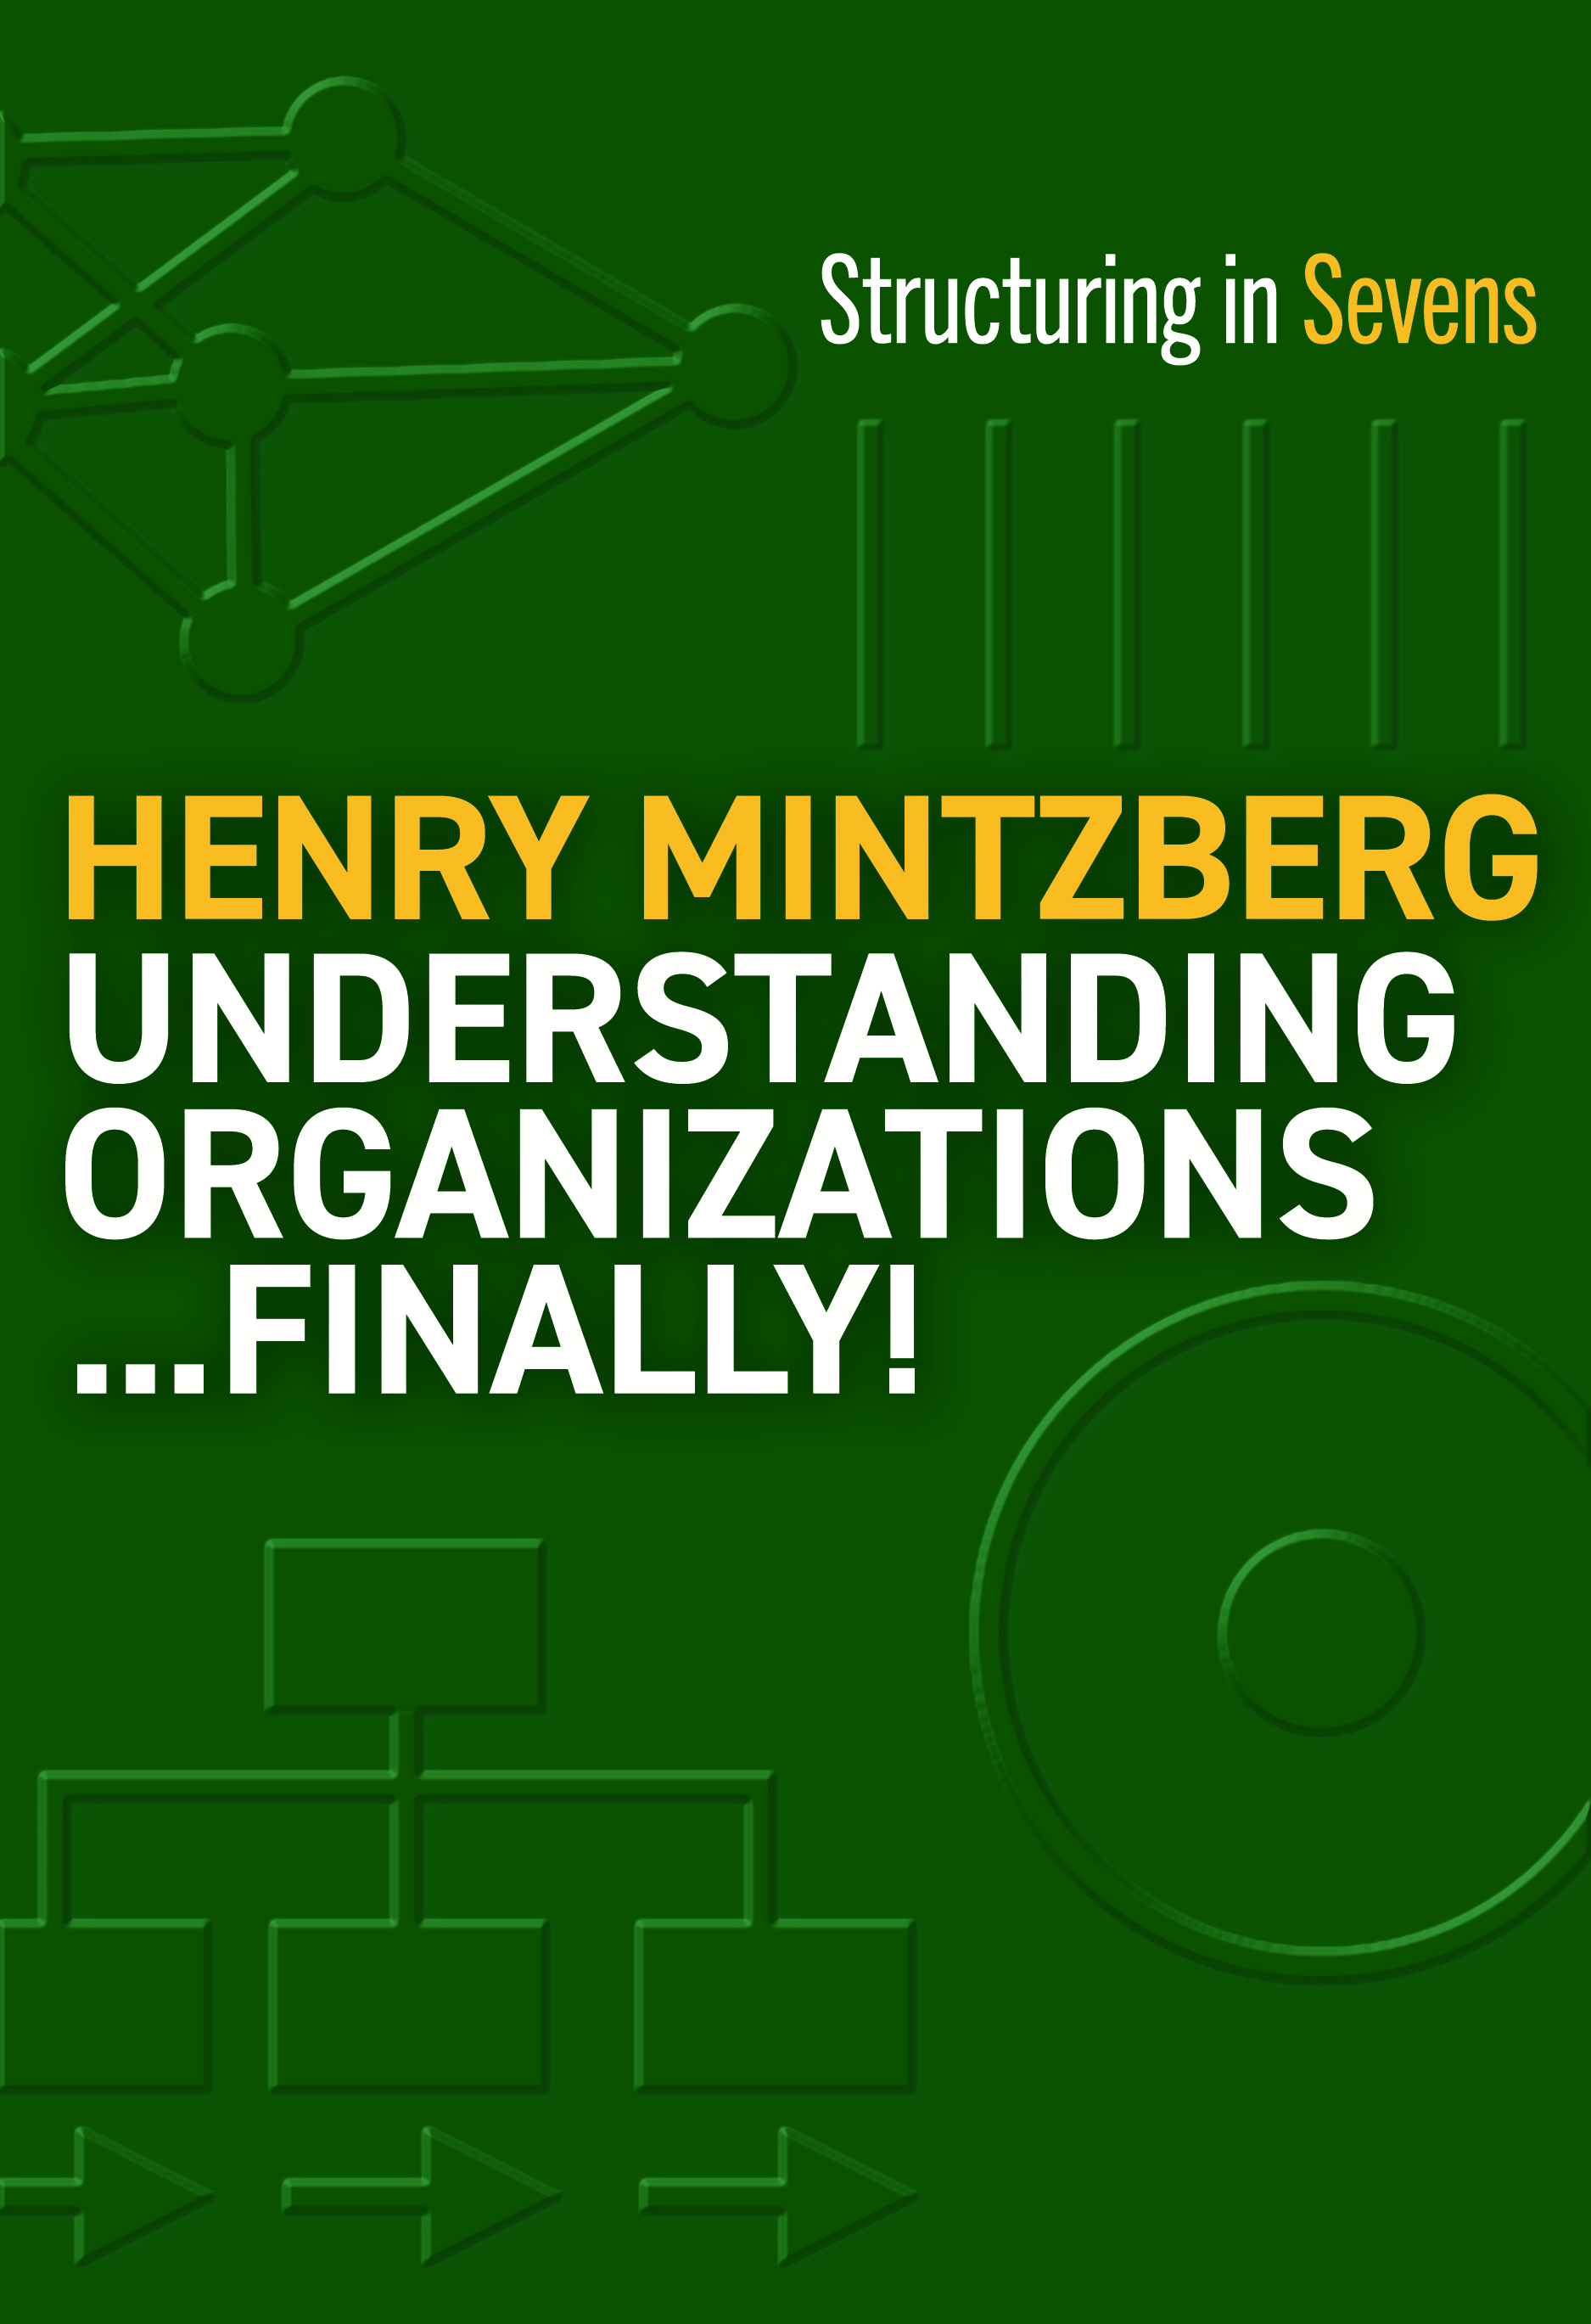 Understanding Organizations…Finally!